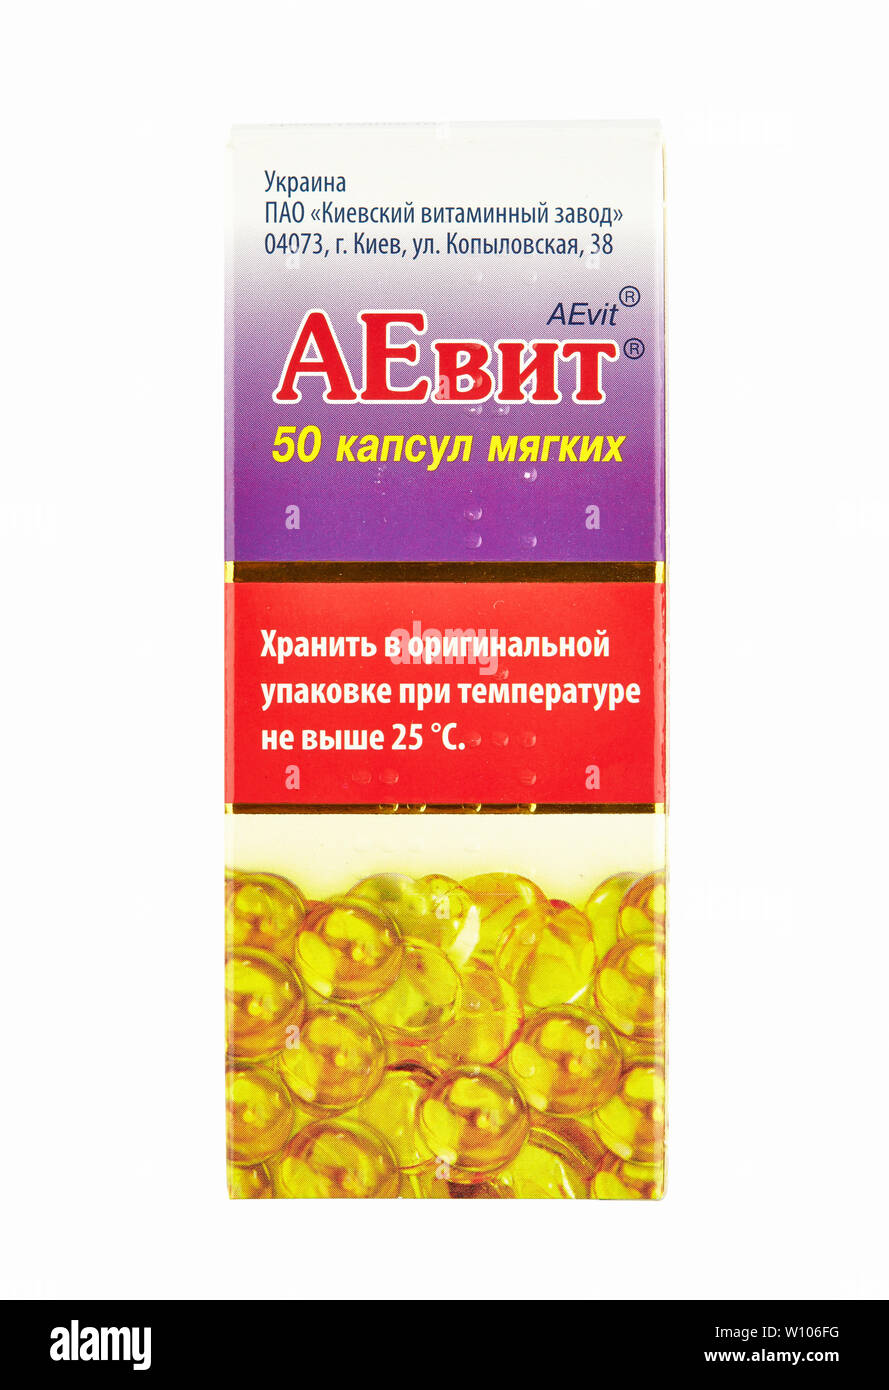 Chernivtsi, Ukraine - July 24, 2018: AEvit - vitamins. Photo of sealed box with pills. Stock Photo